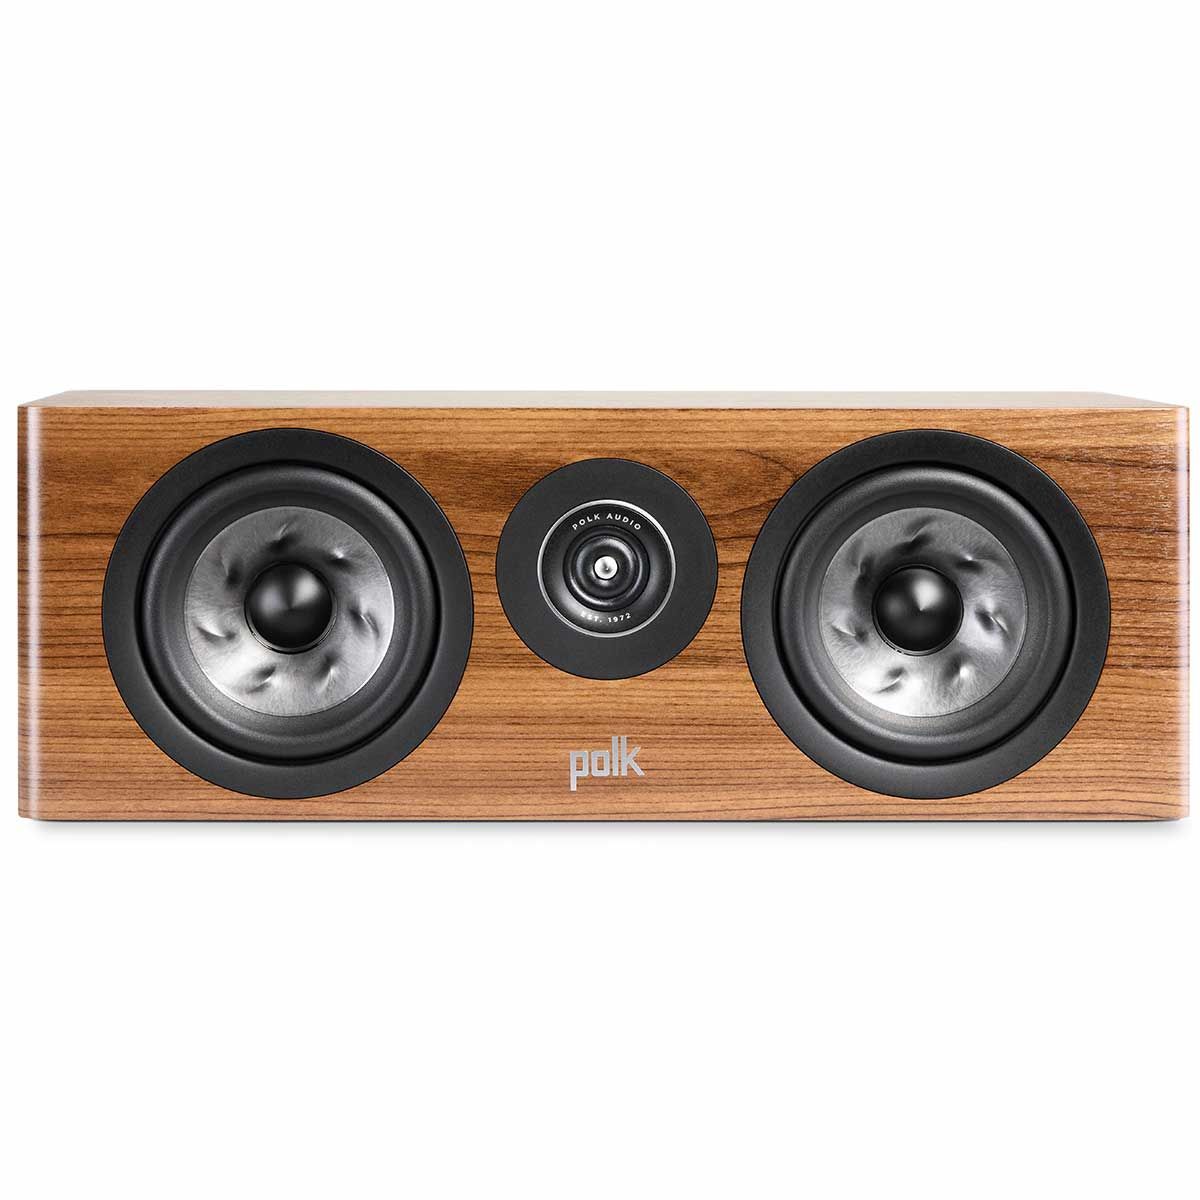 Polk R300 Speaker, Walnut, front